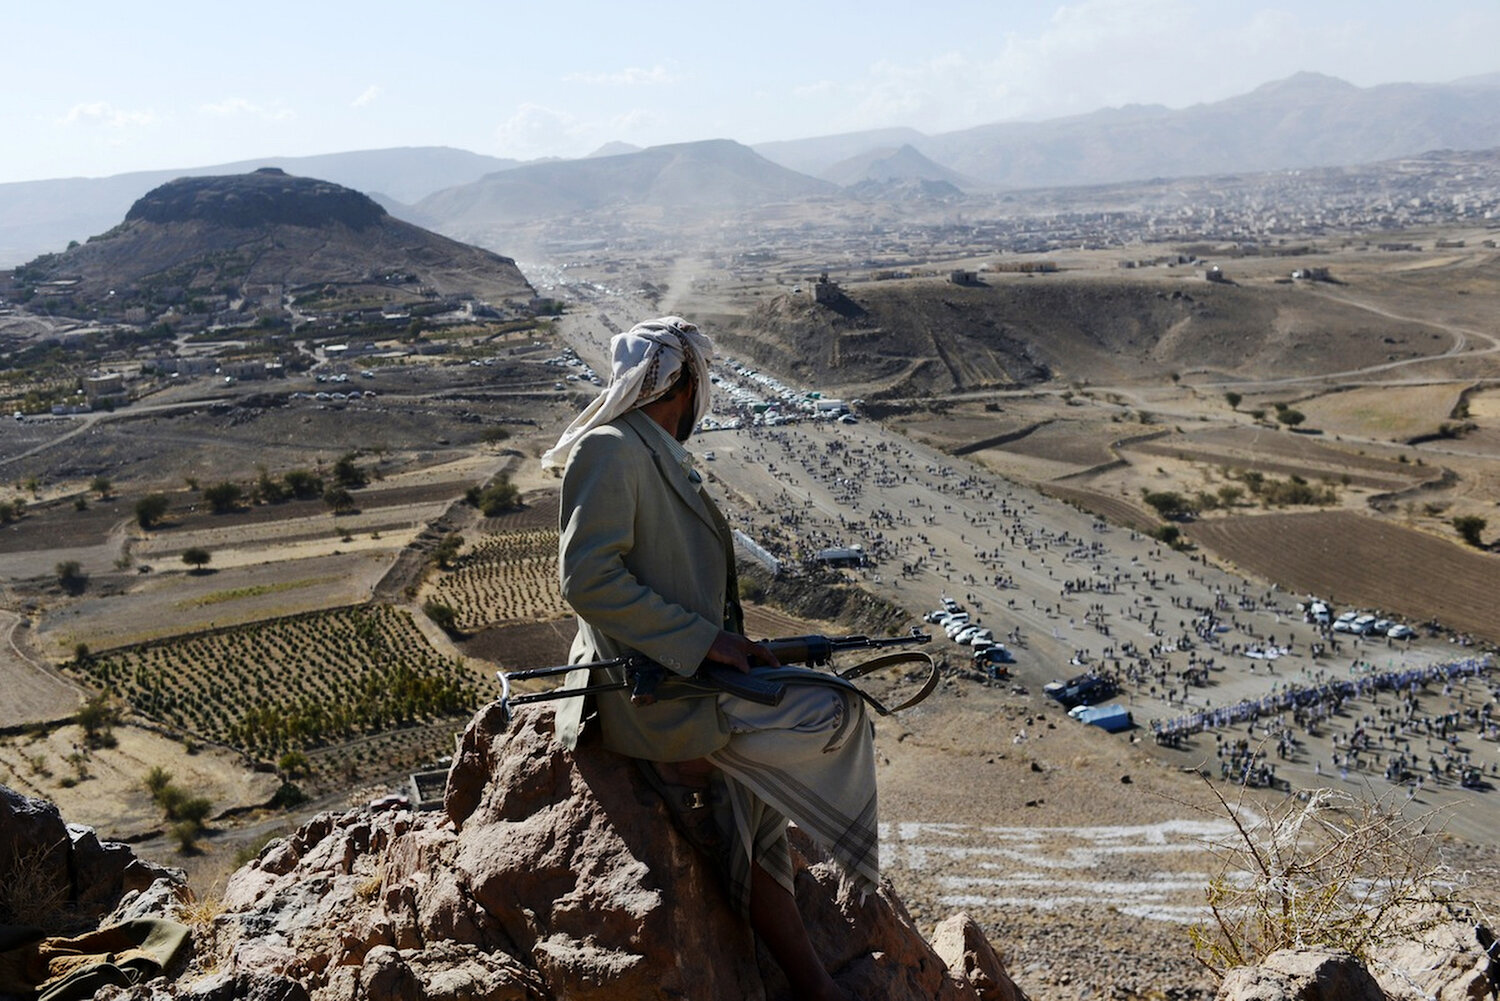  A Yemeni man guards a Houthi gathering from a mountaintop outside of Sana'a. 